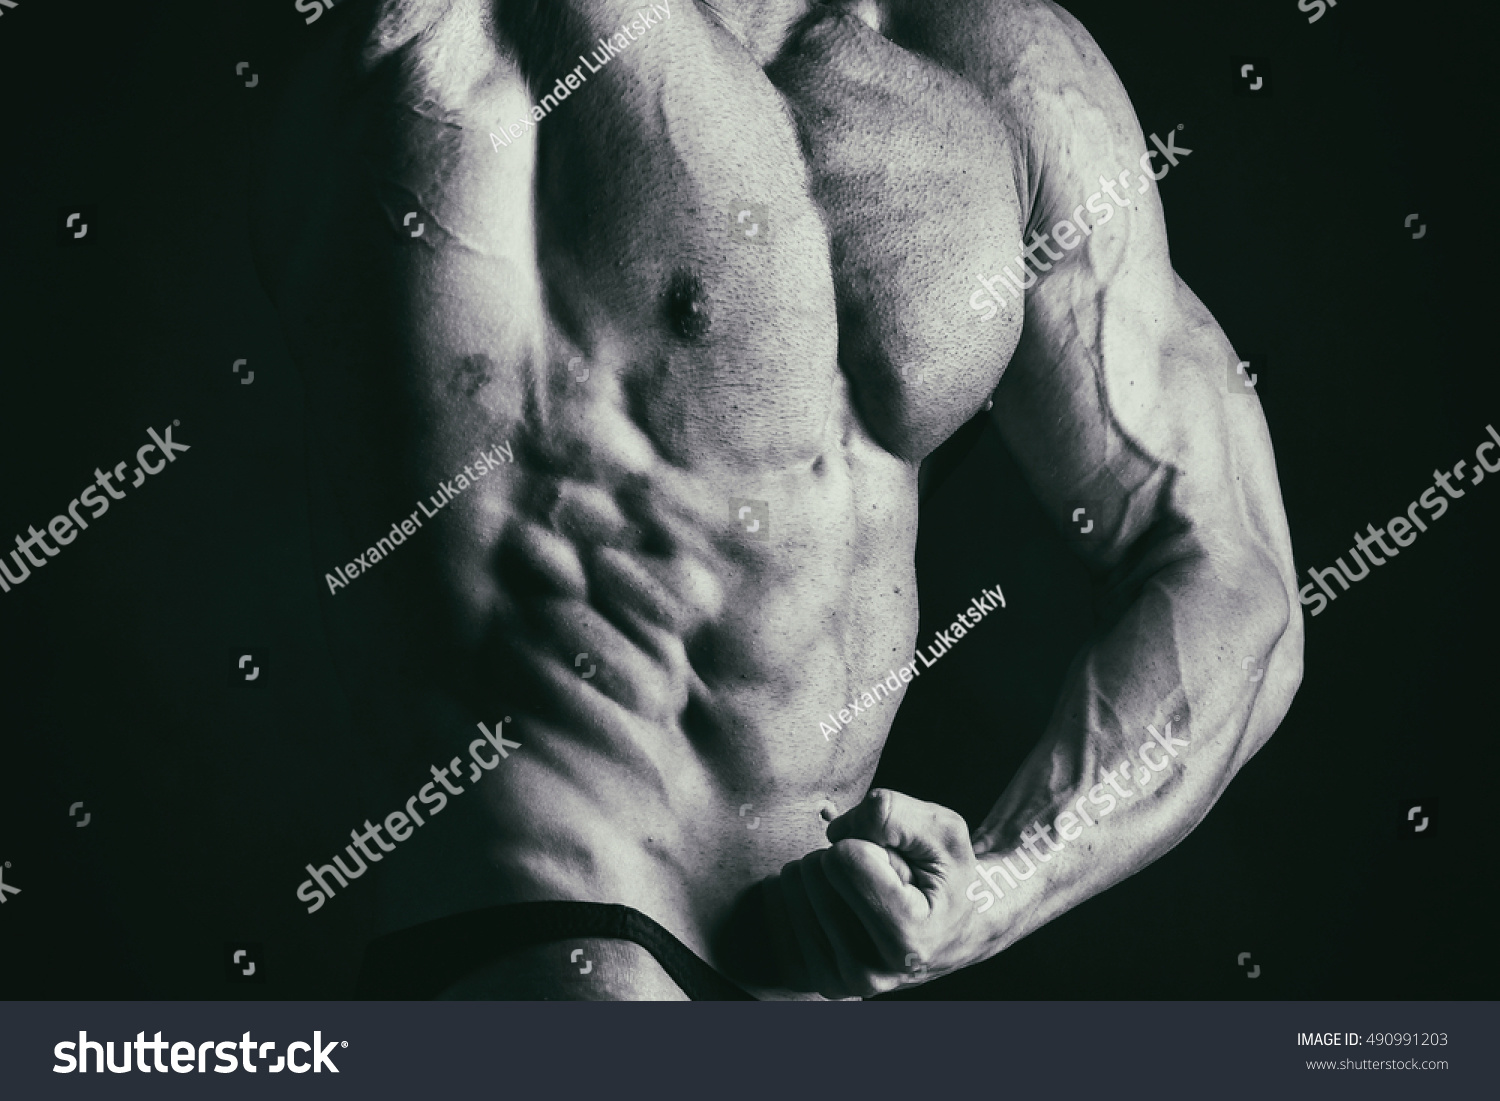 Muscular Male Body Stock Photo 490991203 - Shutterstock